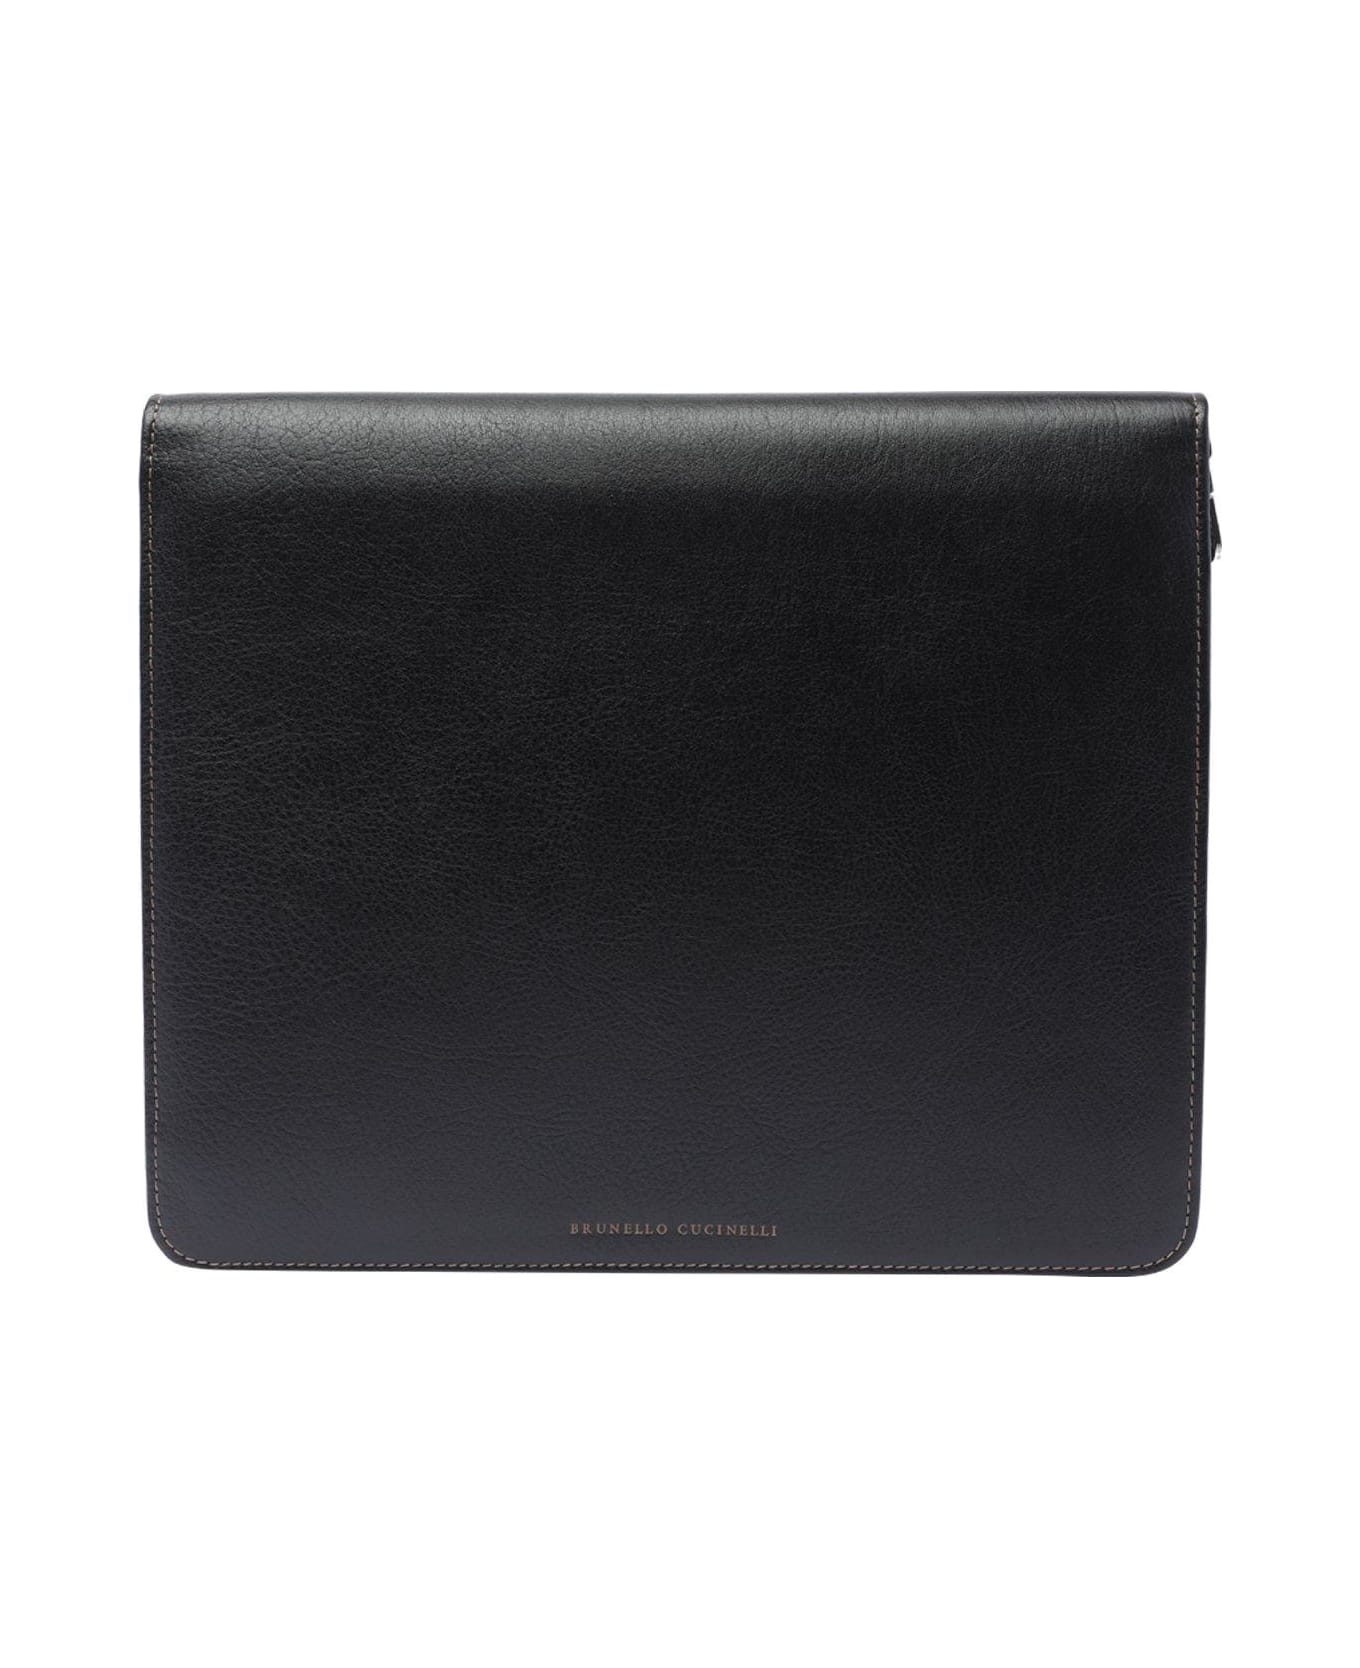 Brunello Cucinelli Zipped Laptop Bag - BLACK